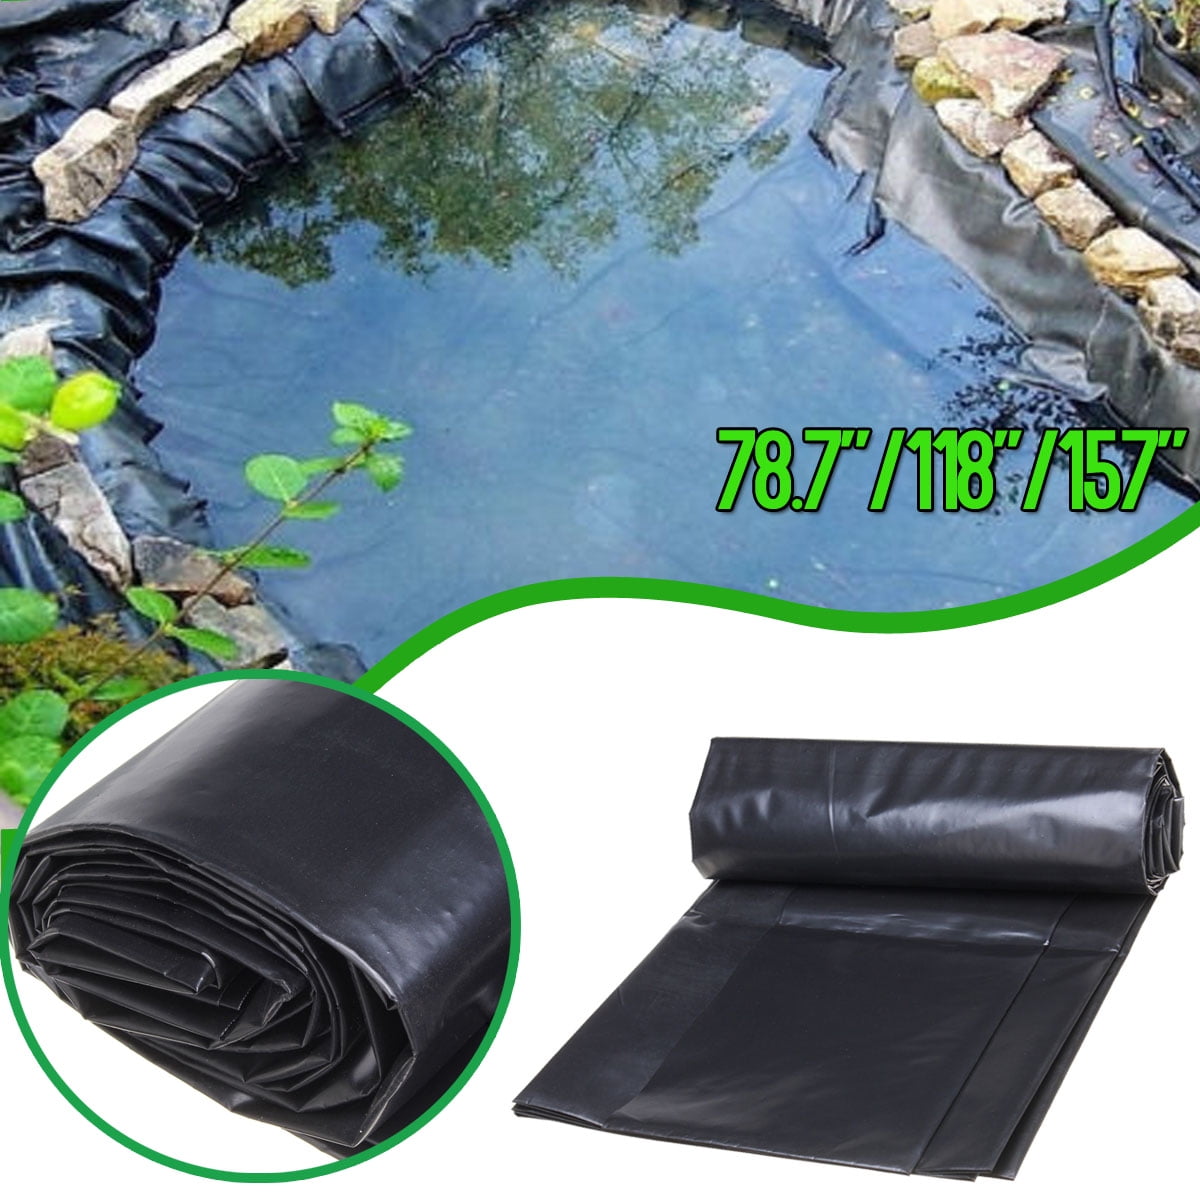 Details about   Black Fish Pond Liner Gardens Pools PVC Membrane Reinforced Landscaping Cover 